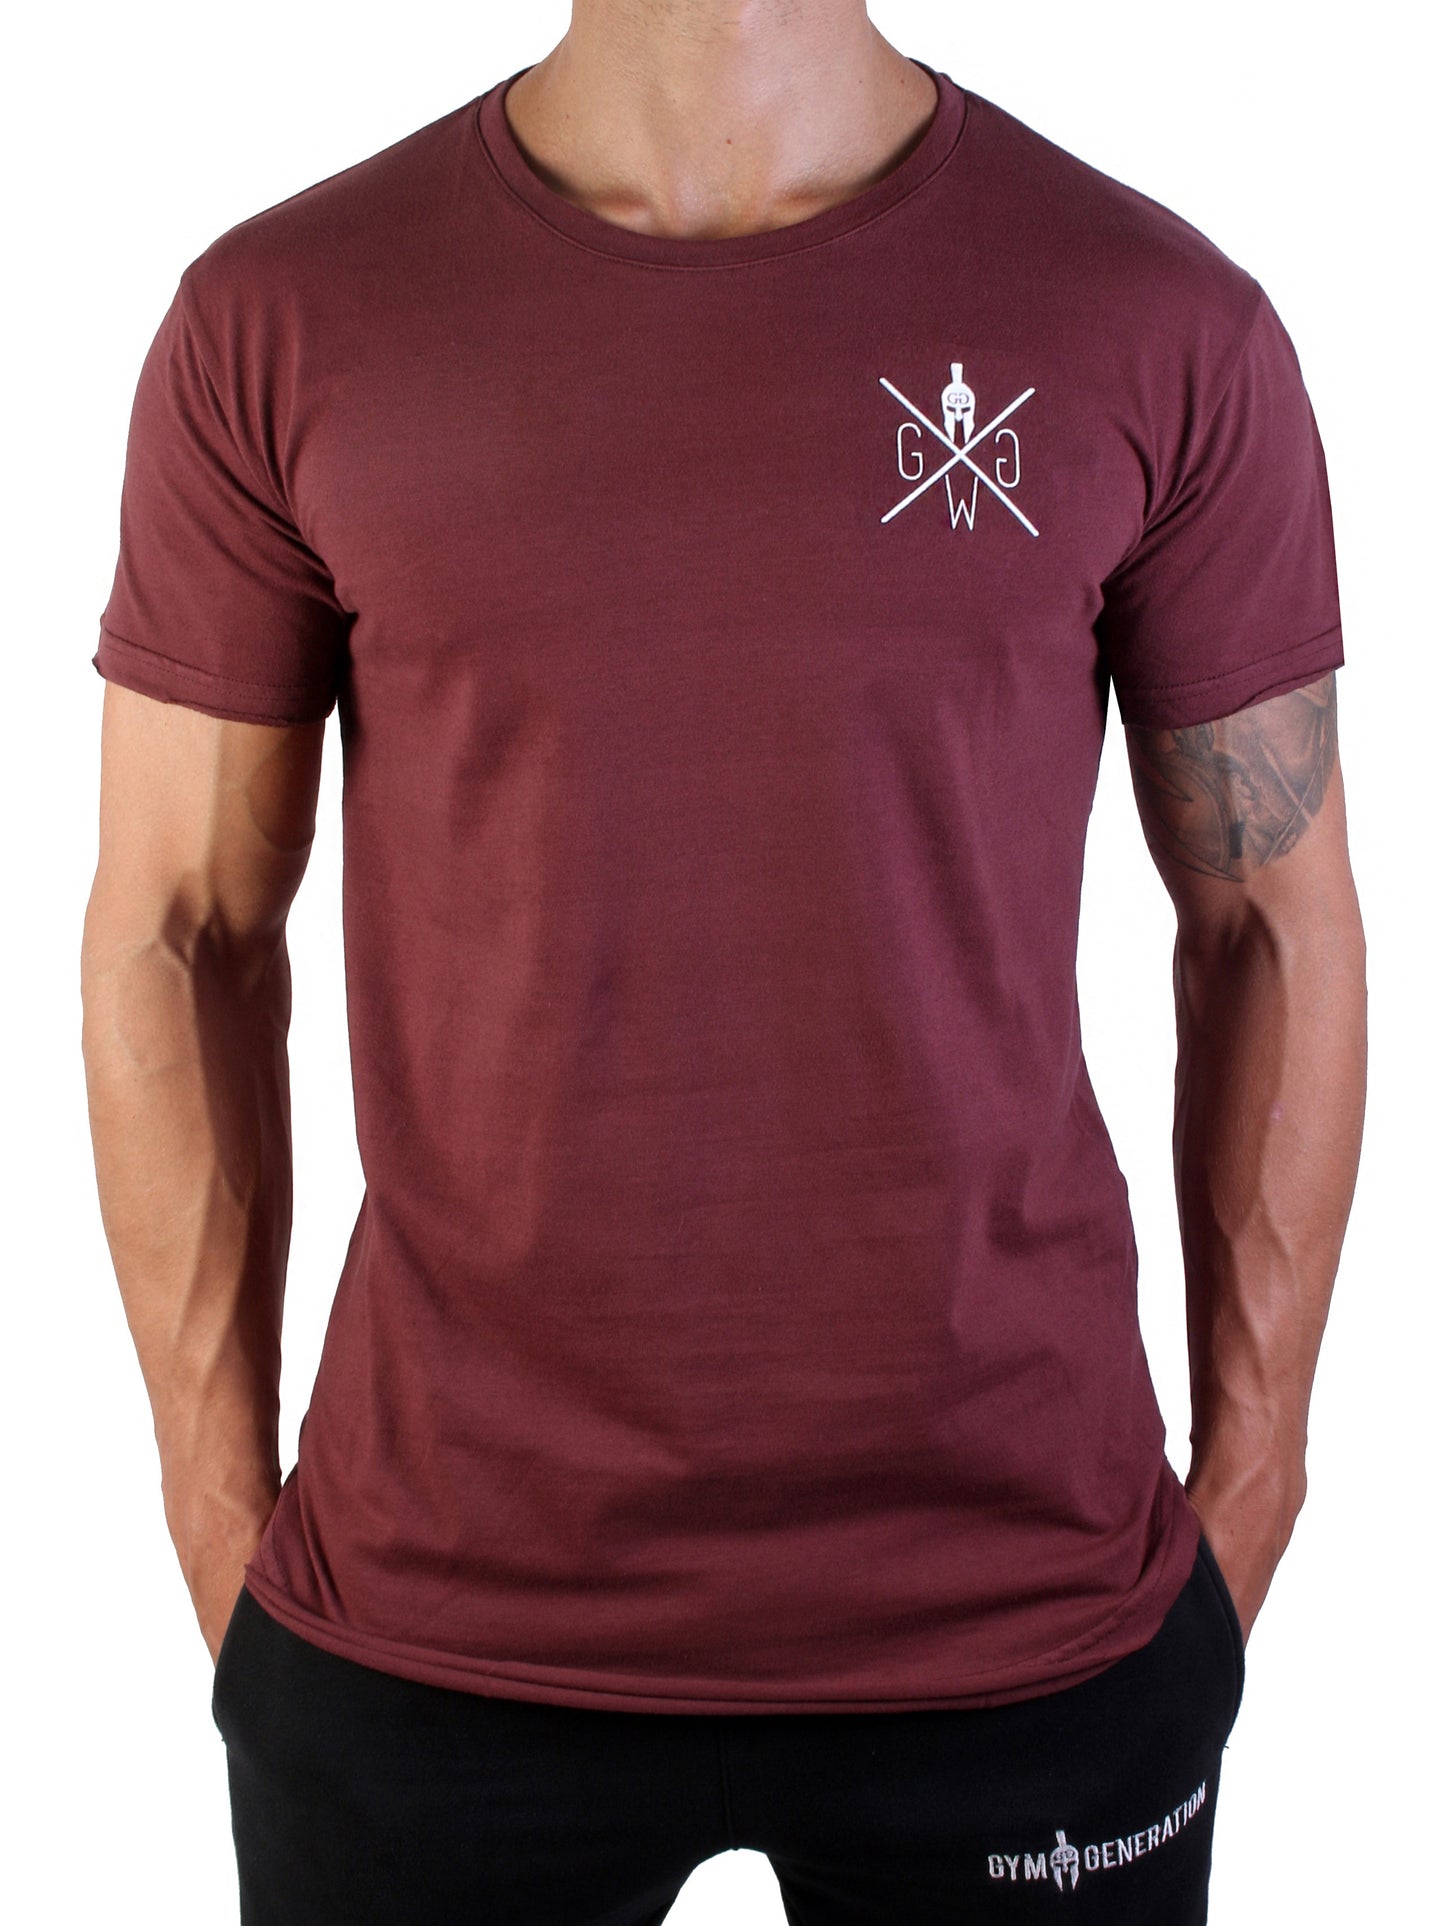 Urban Warrior T-Shirt - Grape